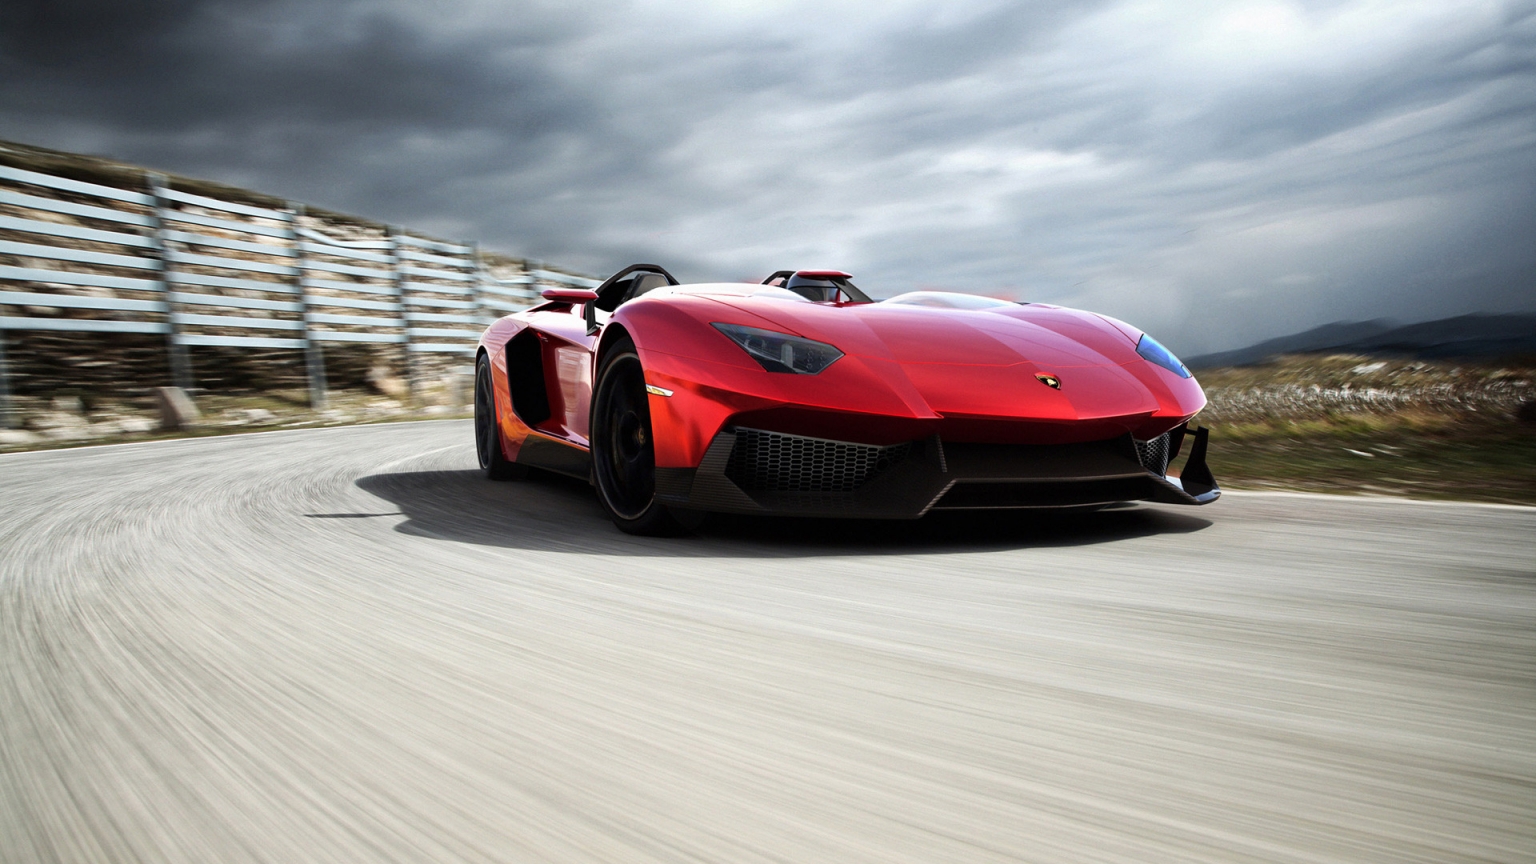 2012 Lamborghini Aventador J Speed for 1536 x 864 HDTV resolution